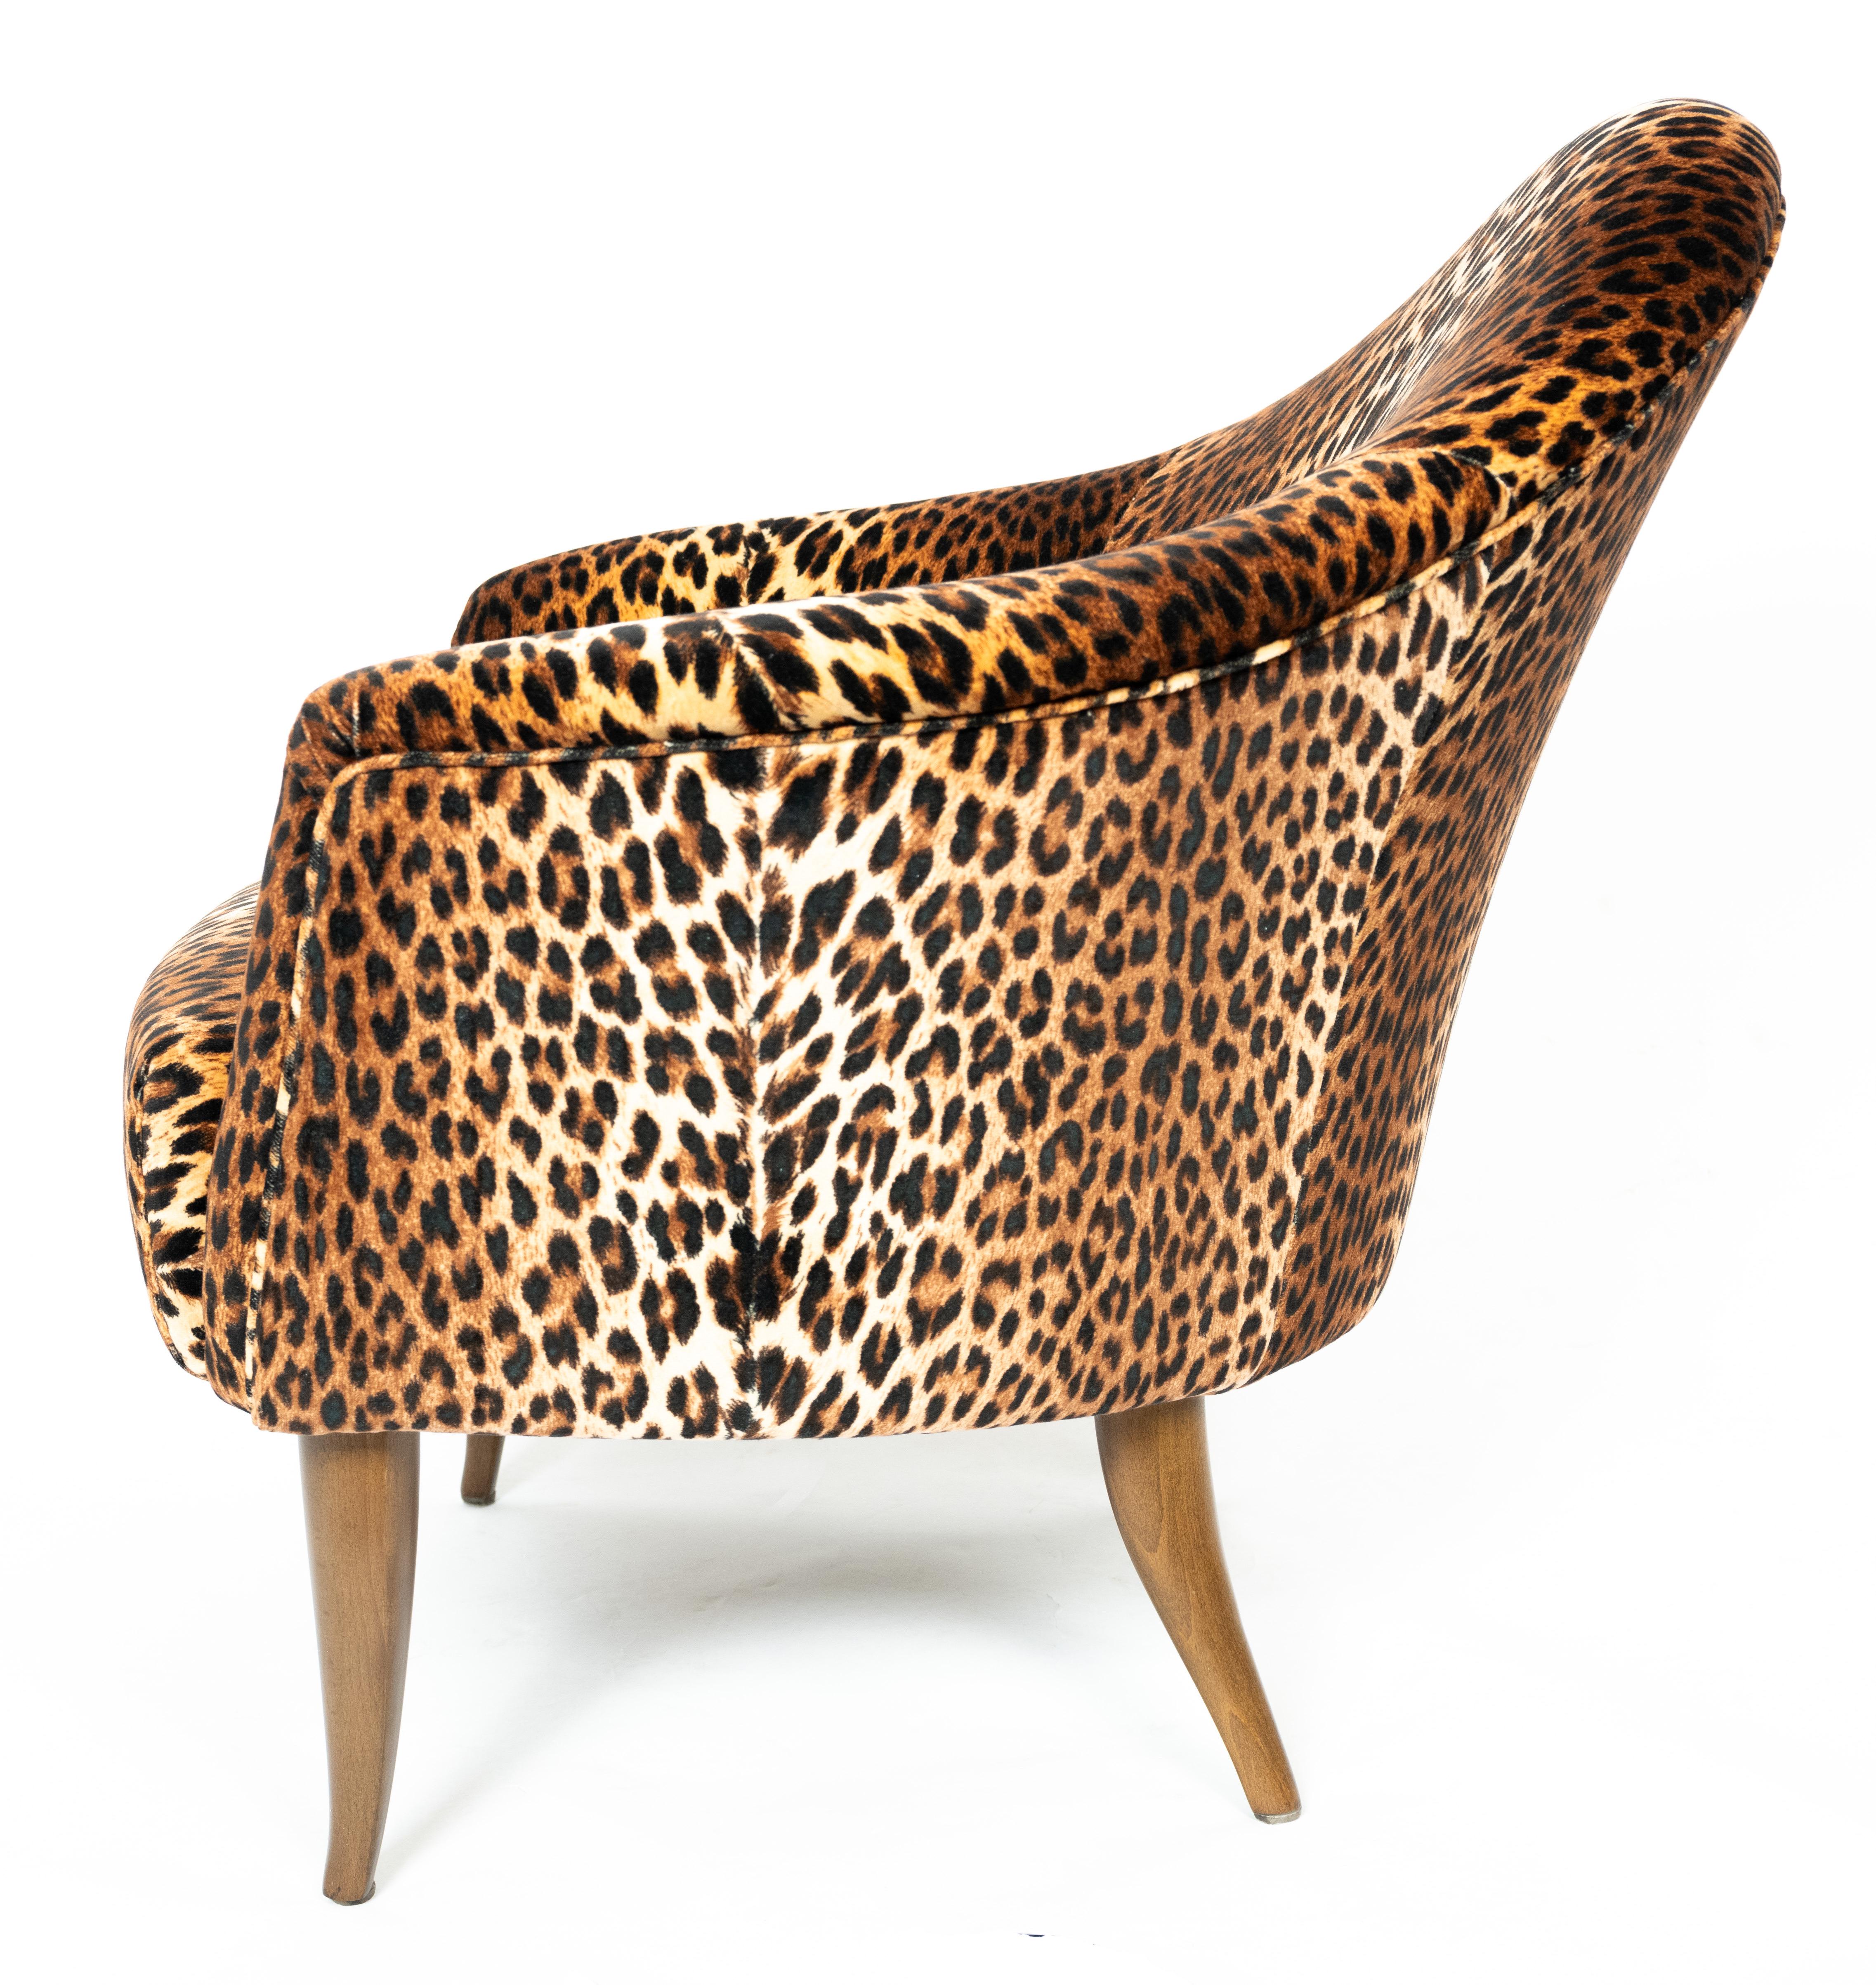 ‘Lila Adam’ Chair Swedish Midcentury Design Armchair Kerstin Hörlin-Holmquist For Sale 1